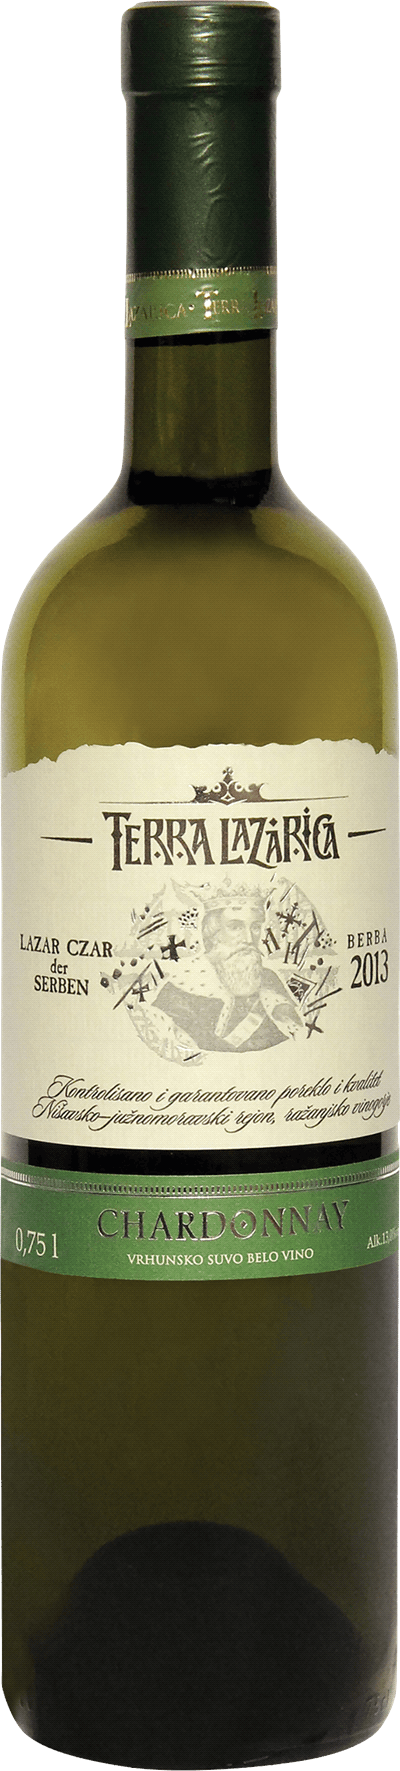 Terra Lazzarica Chardonnay, 2013